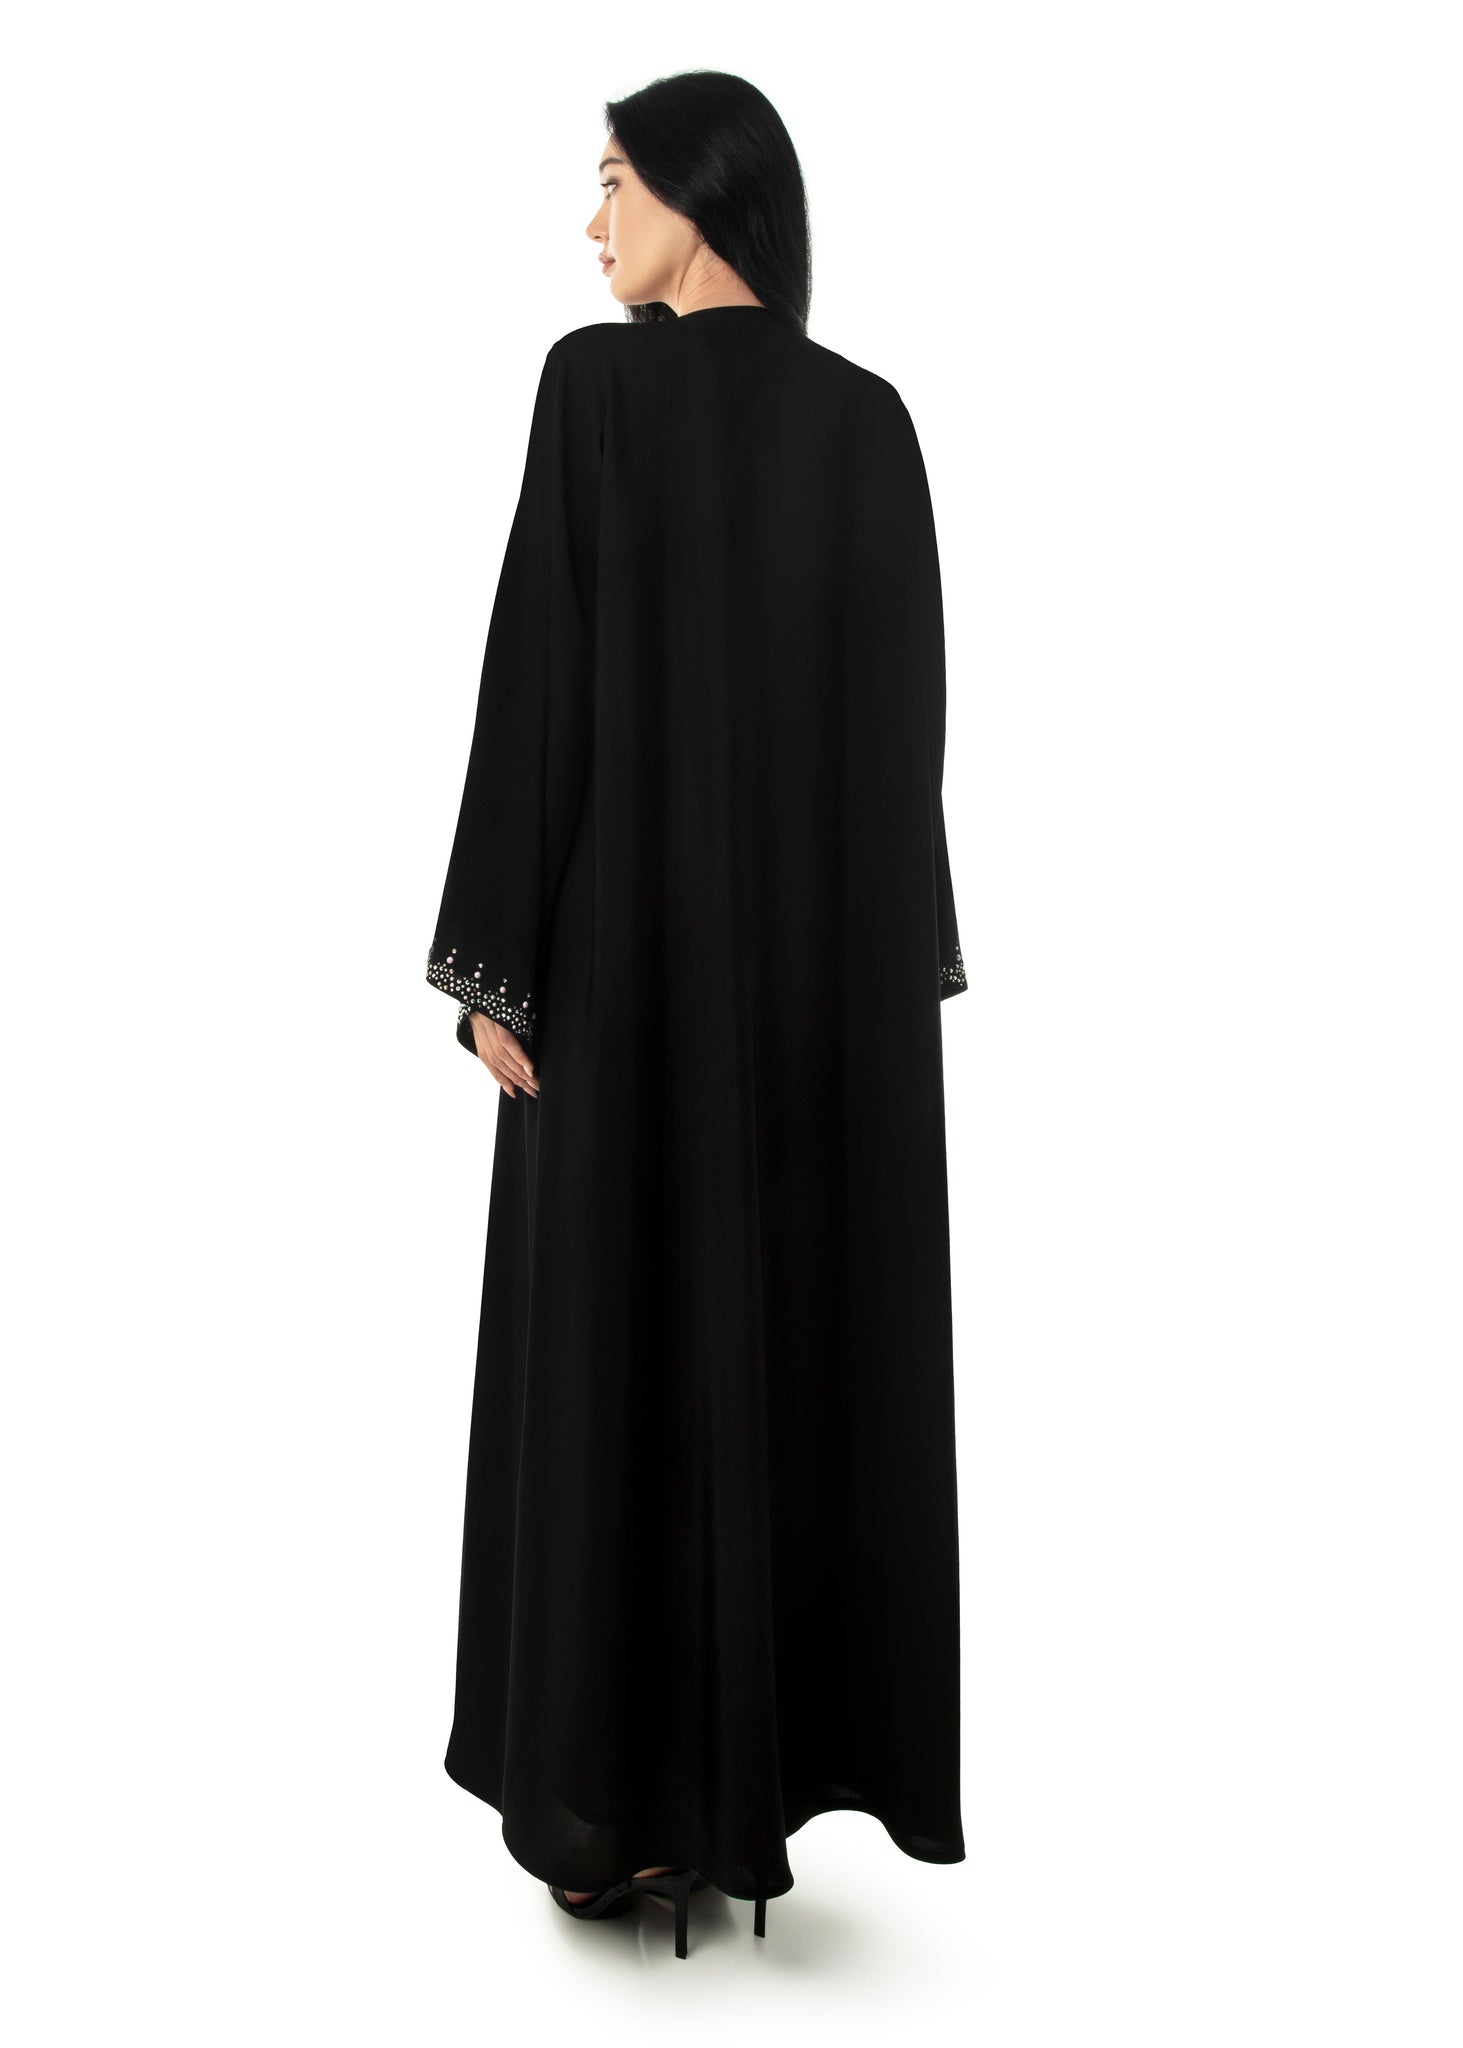 Hanayen Crystalized Dubai Style Abaya